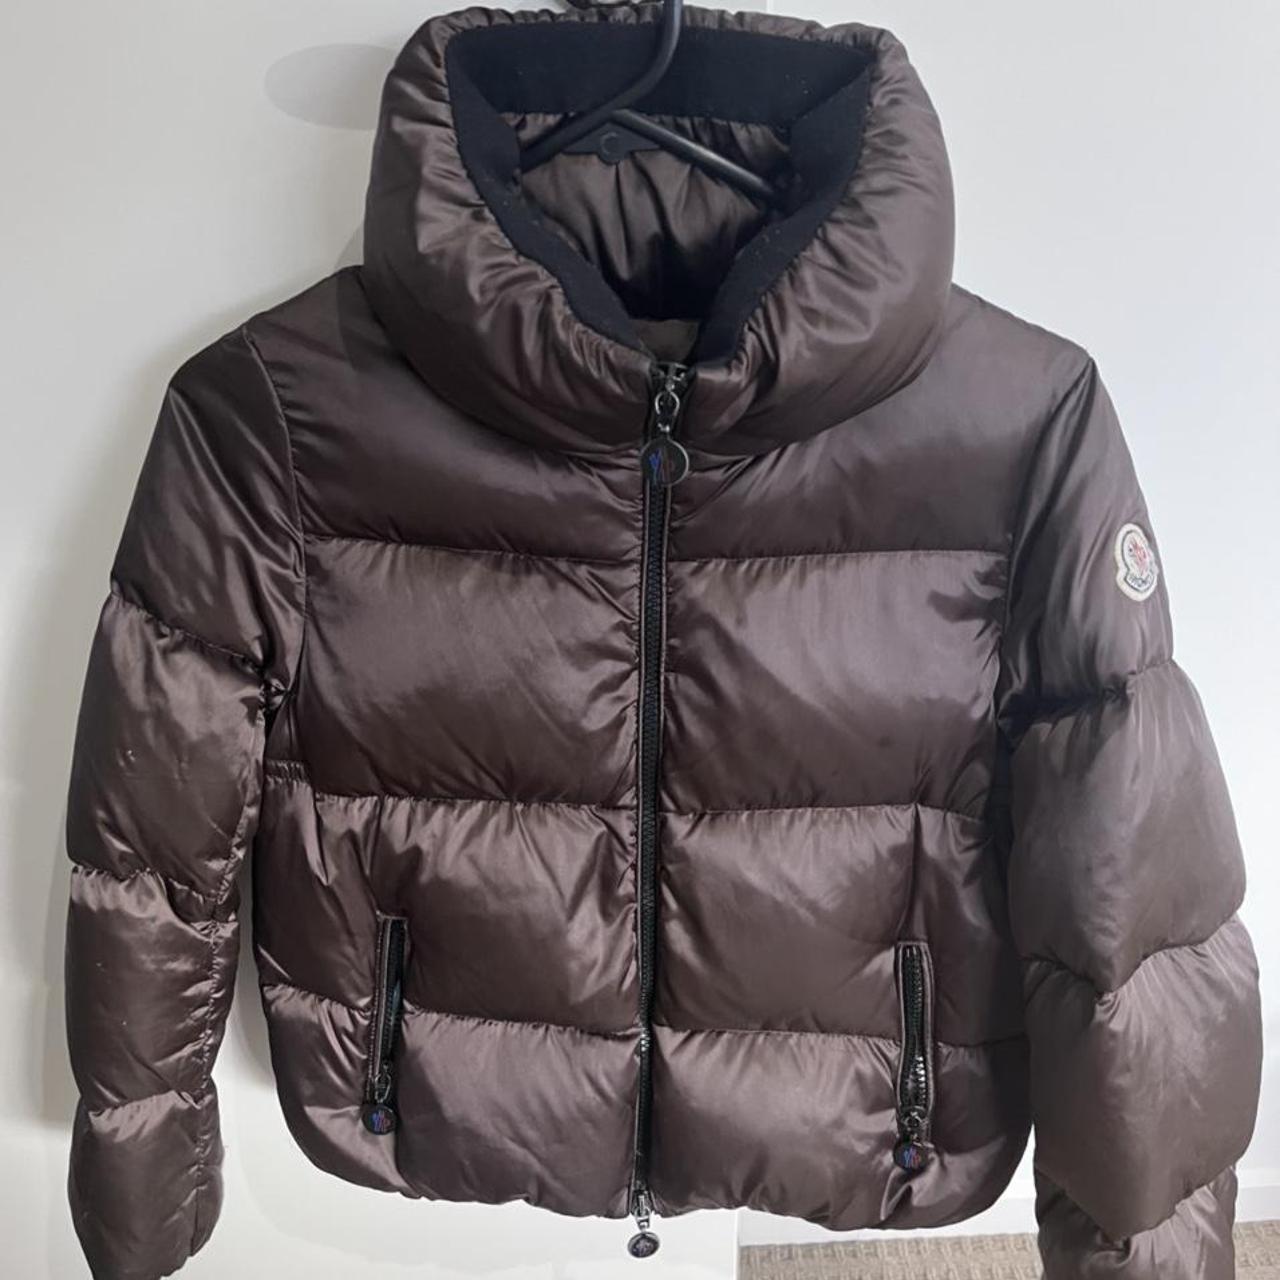 Moncler puffer jacket x kid size 10 yrs - cm 140 -... - Depop